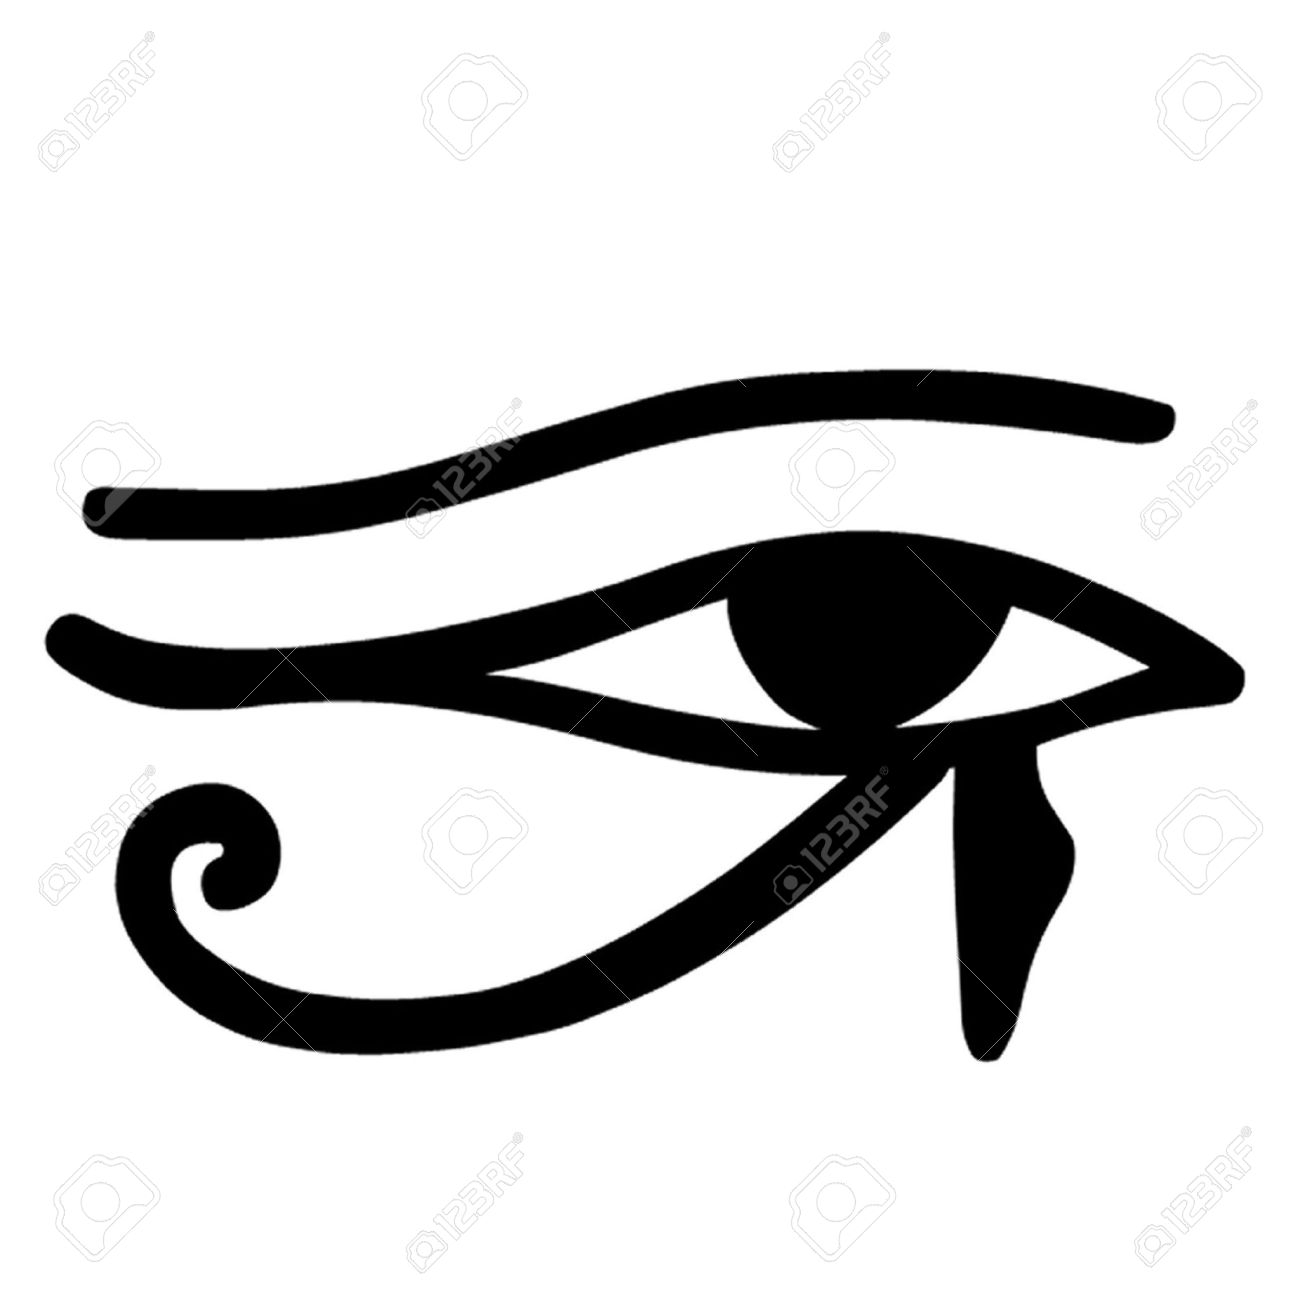 Уаджет на египетском иероглиф